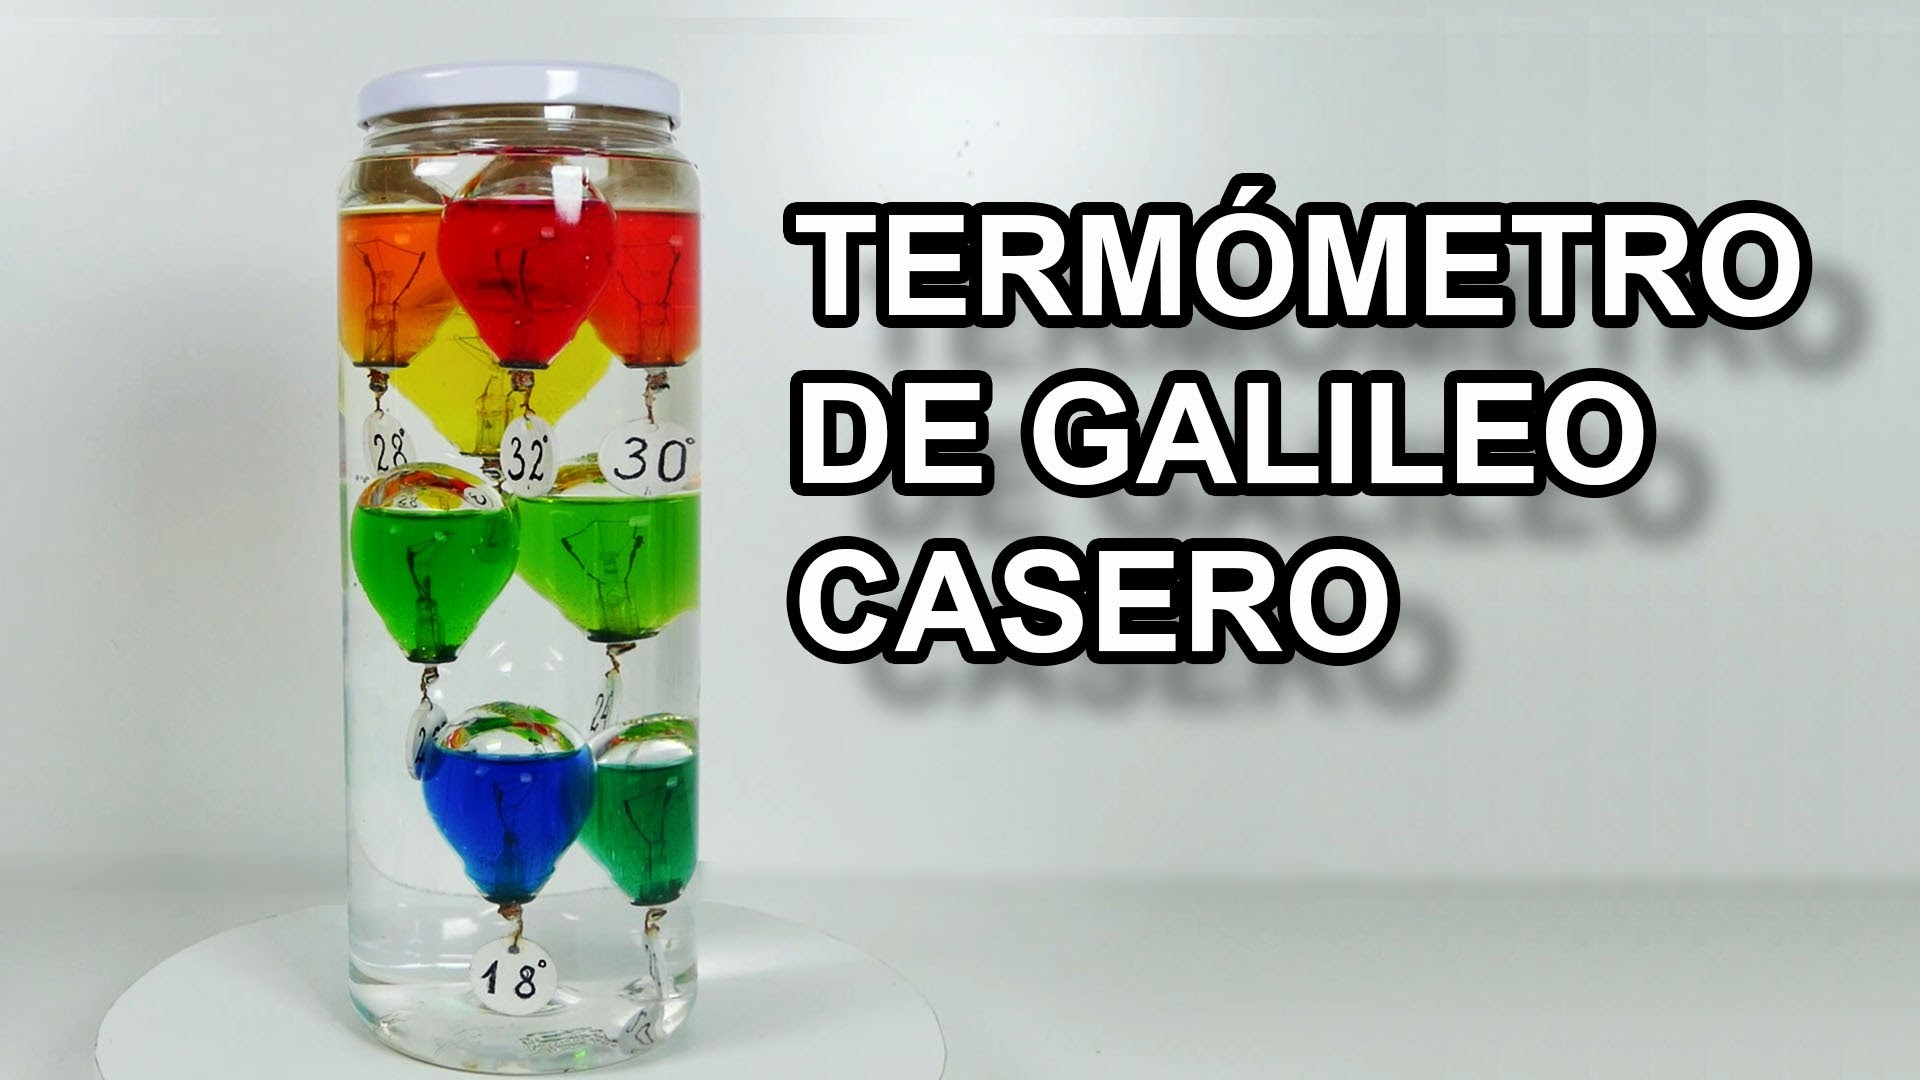 Termometro de Galileo Casero  #todoesagua  -  Experimentar En Casa